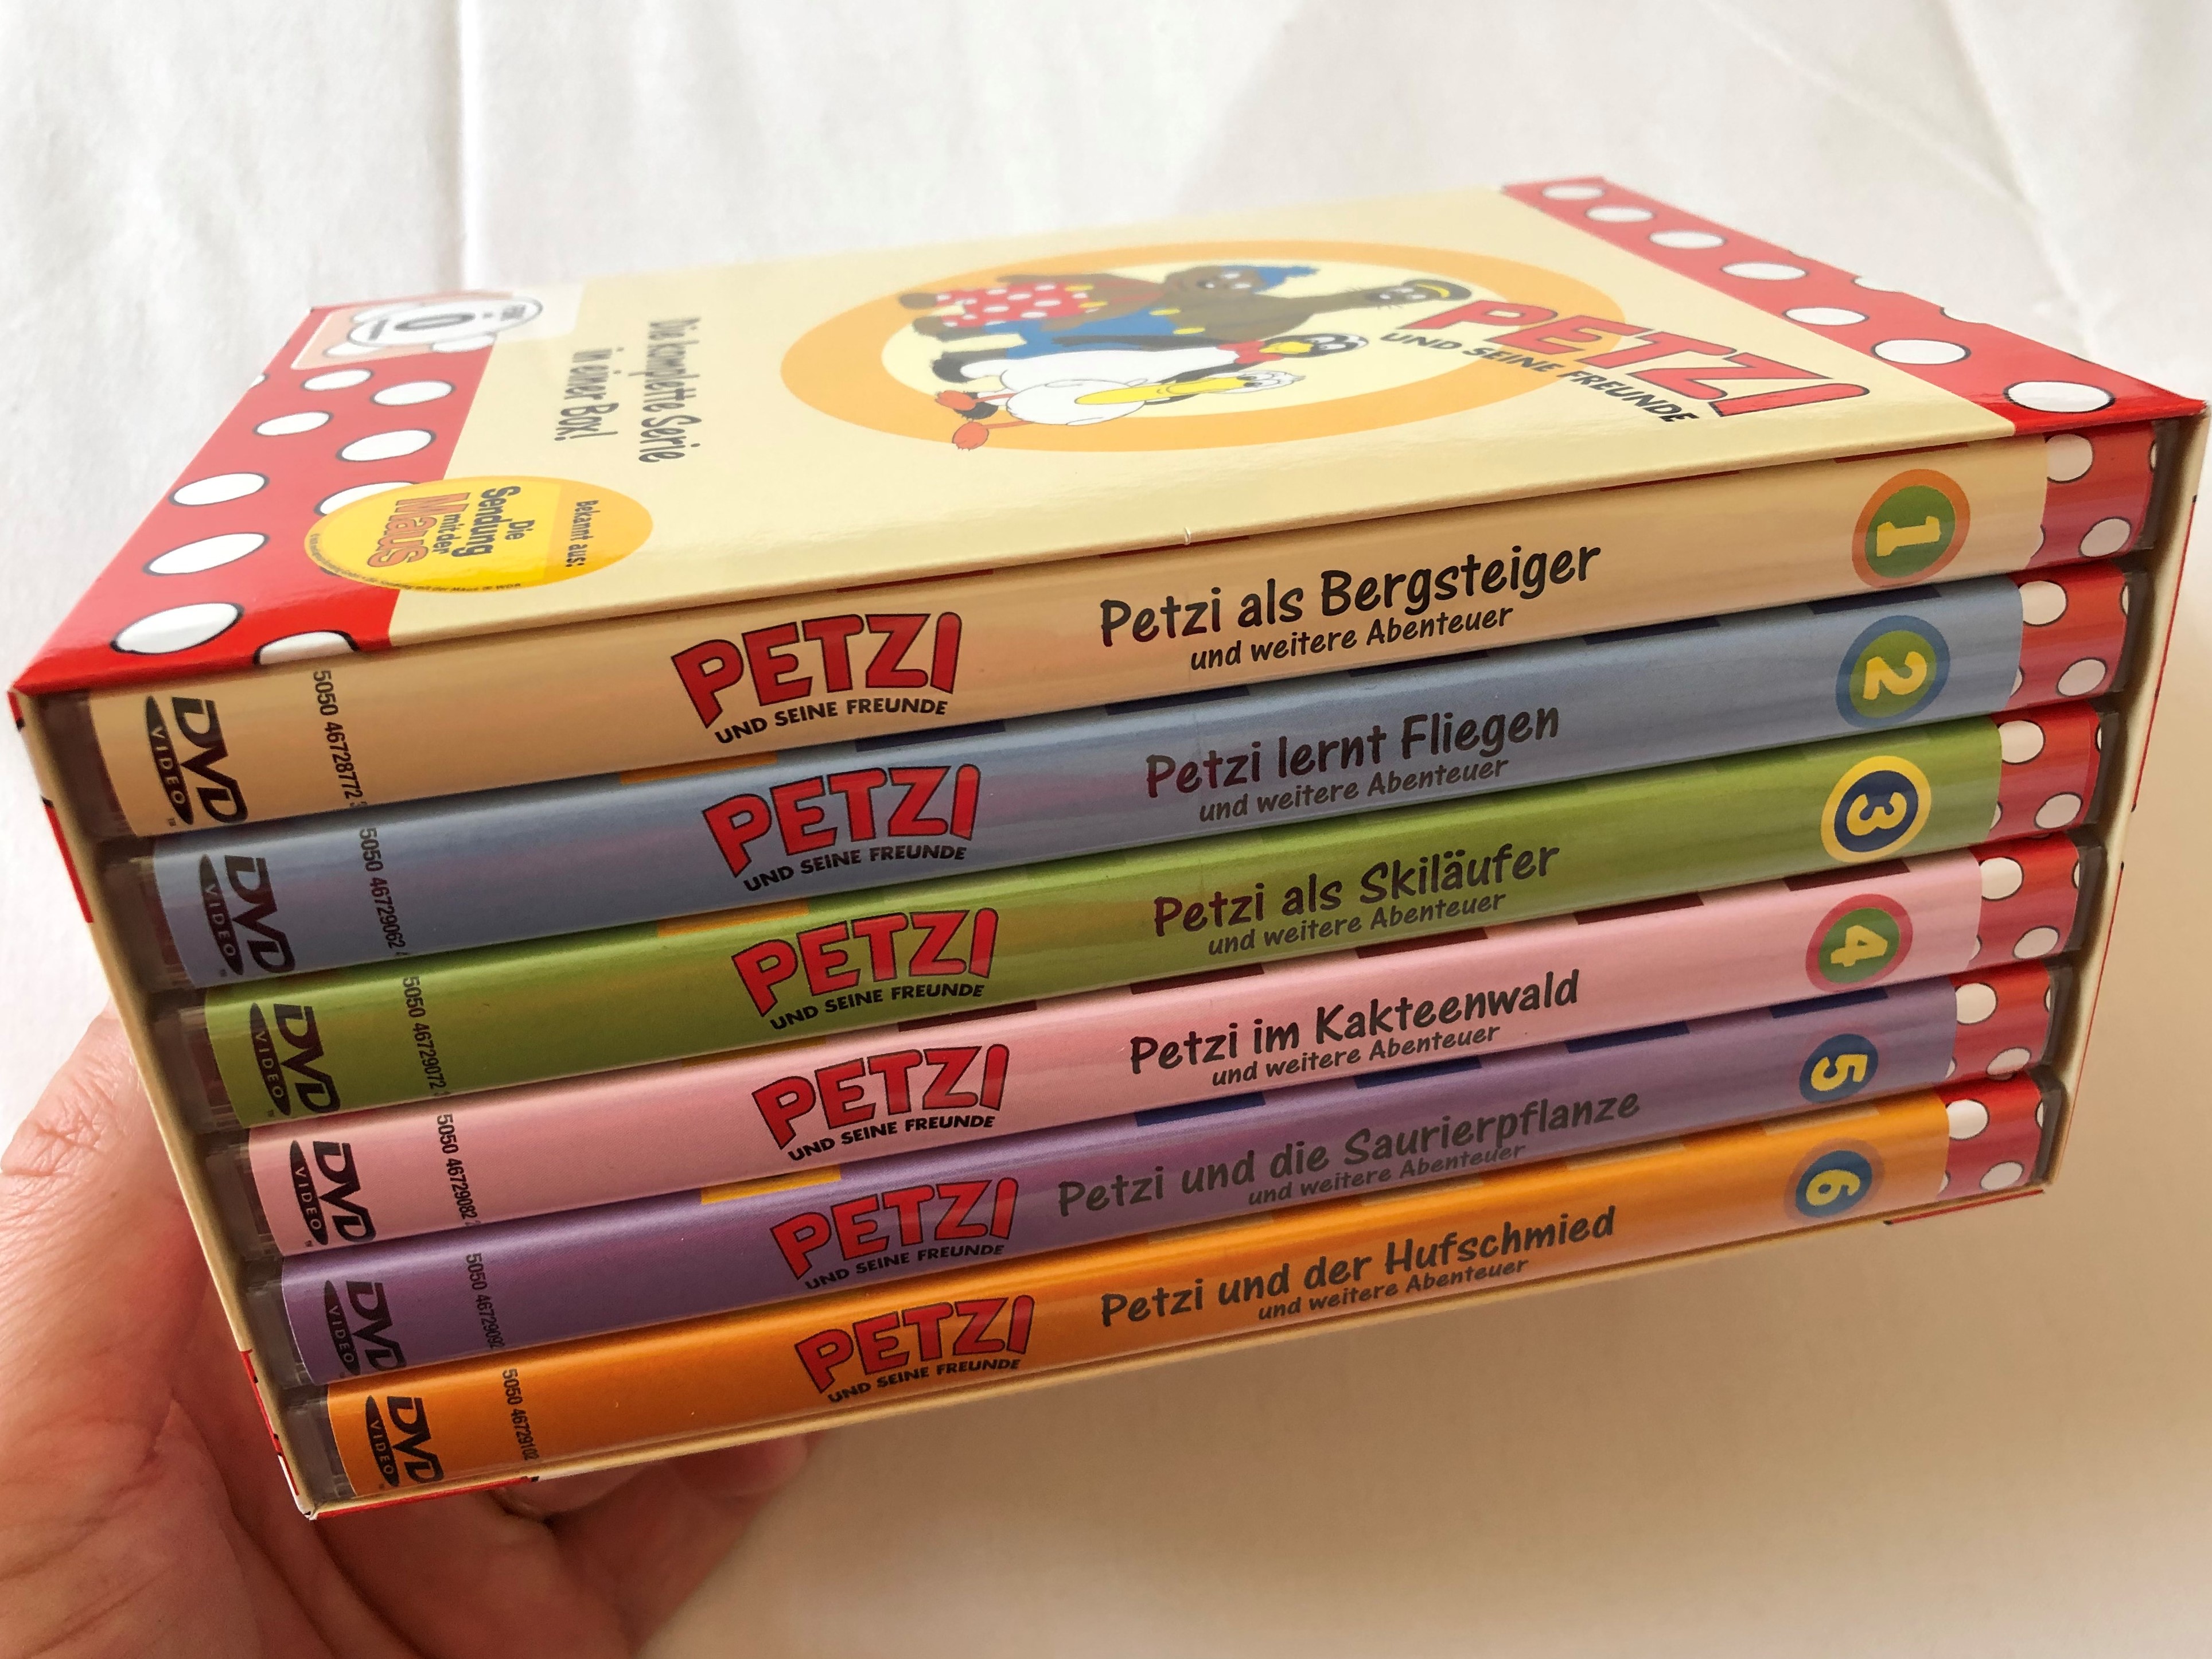 petzi-und-seine-freunde-dvd-set-2004-petzi-and-his-friends-6-discs-52-episodes-classic-german-cartoon-3-.jpg